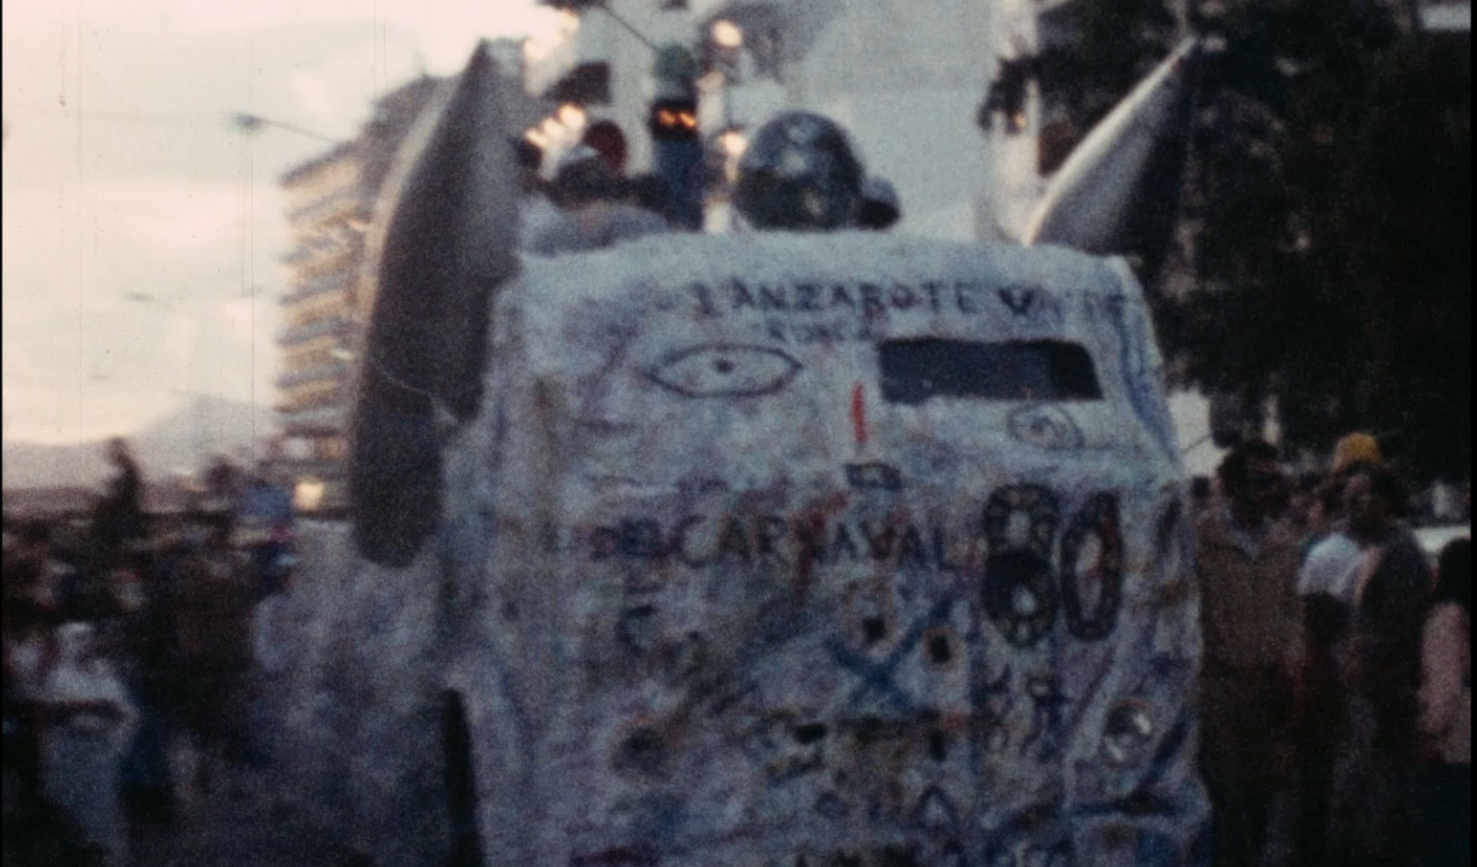 Carnaval de Arrecife (c. 1980)